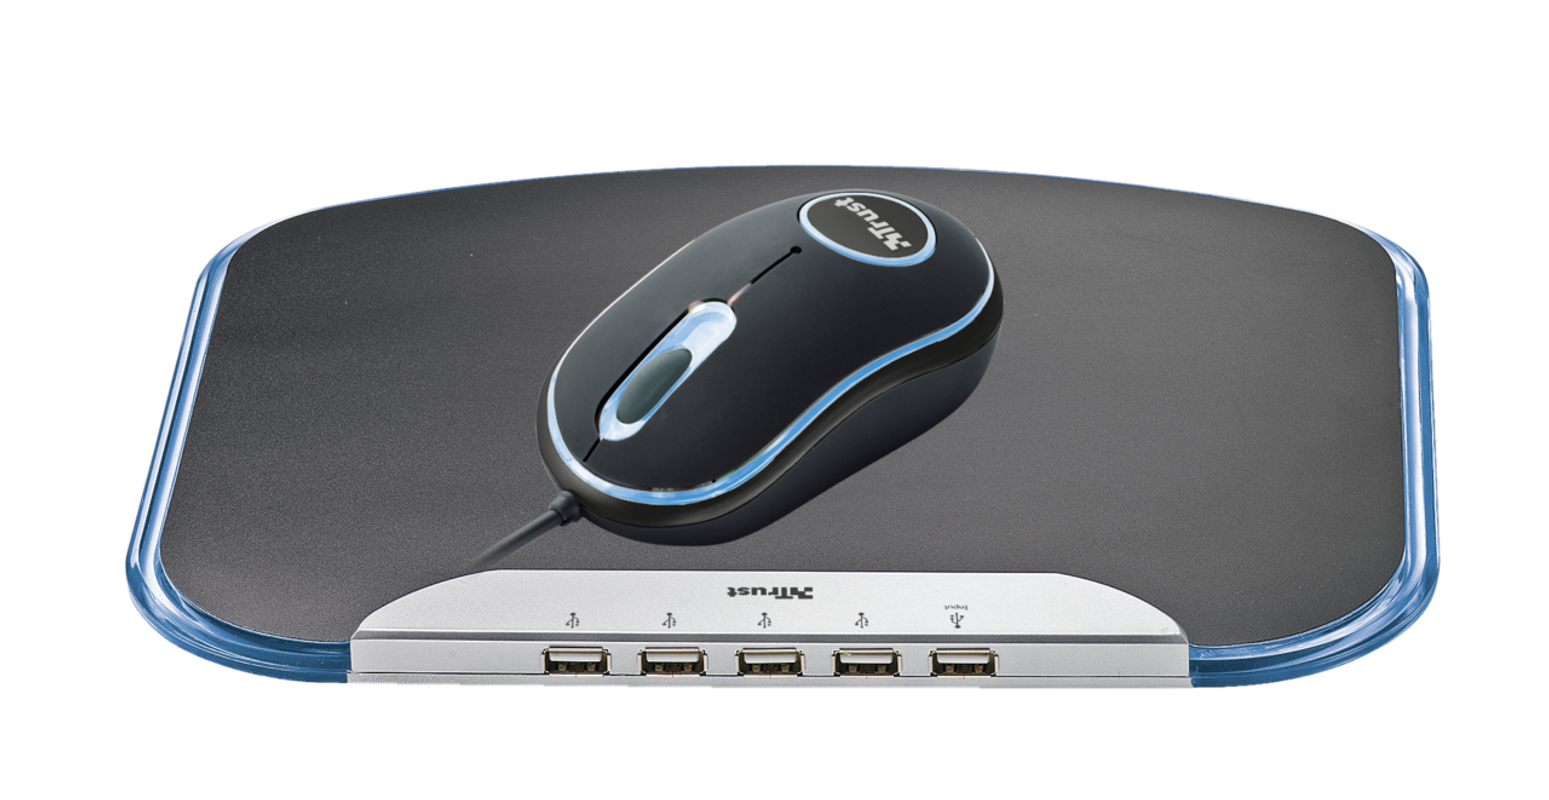 Illuminated Mouse & Pad with USB2 Hub HU-4880-Visual